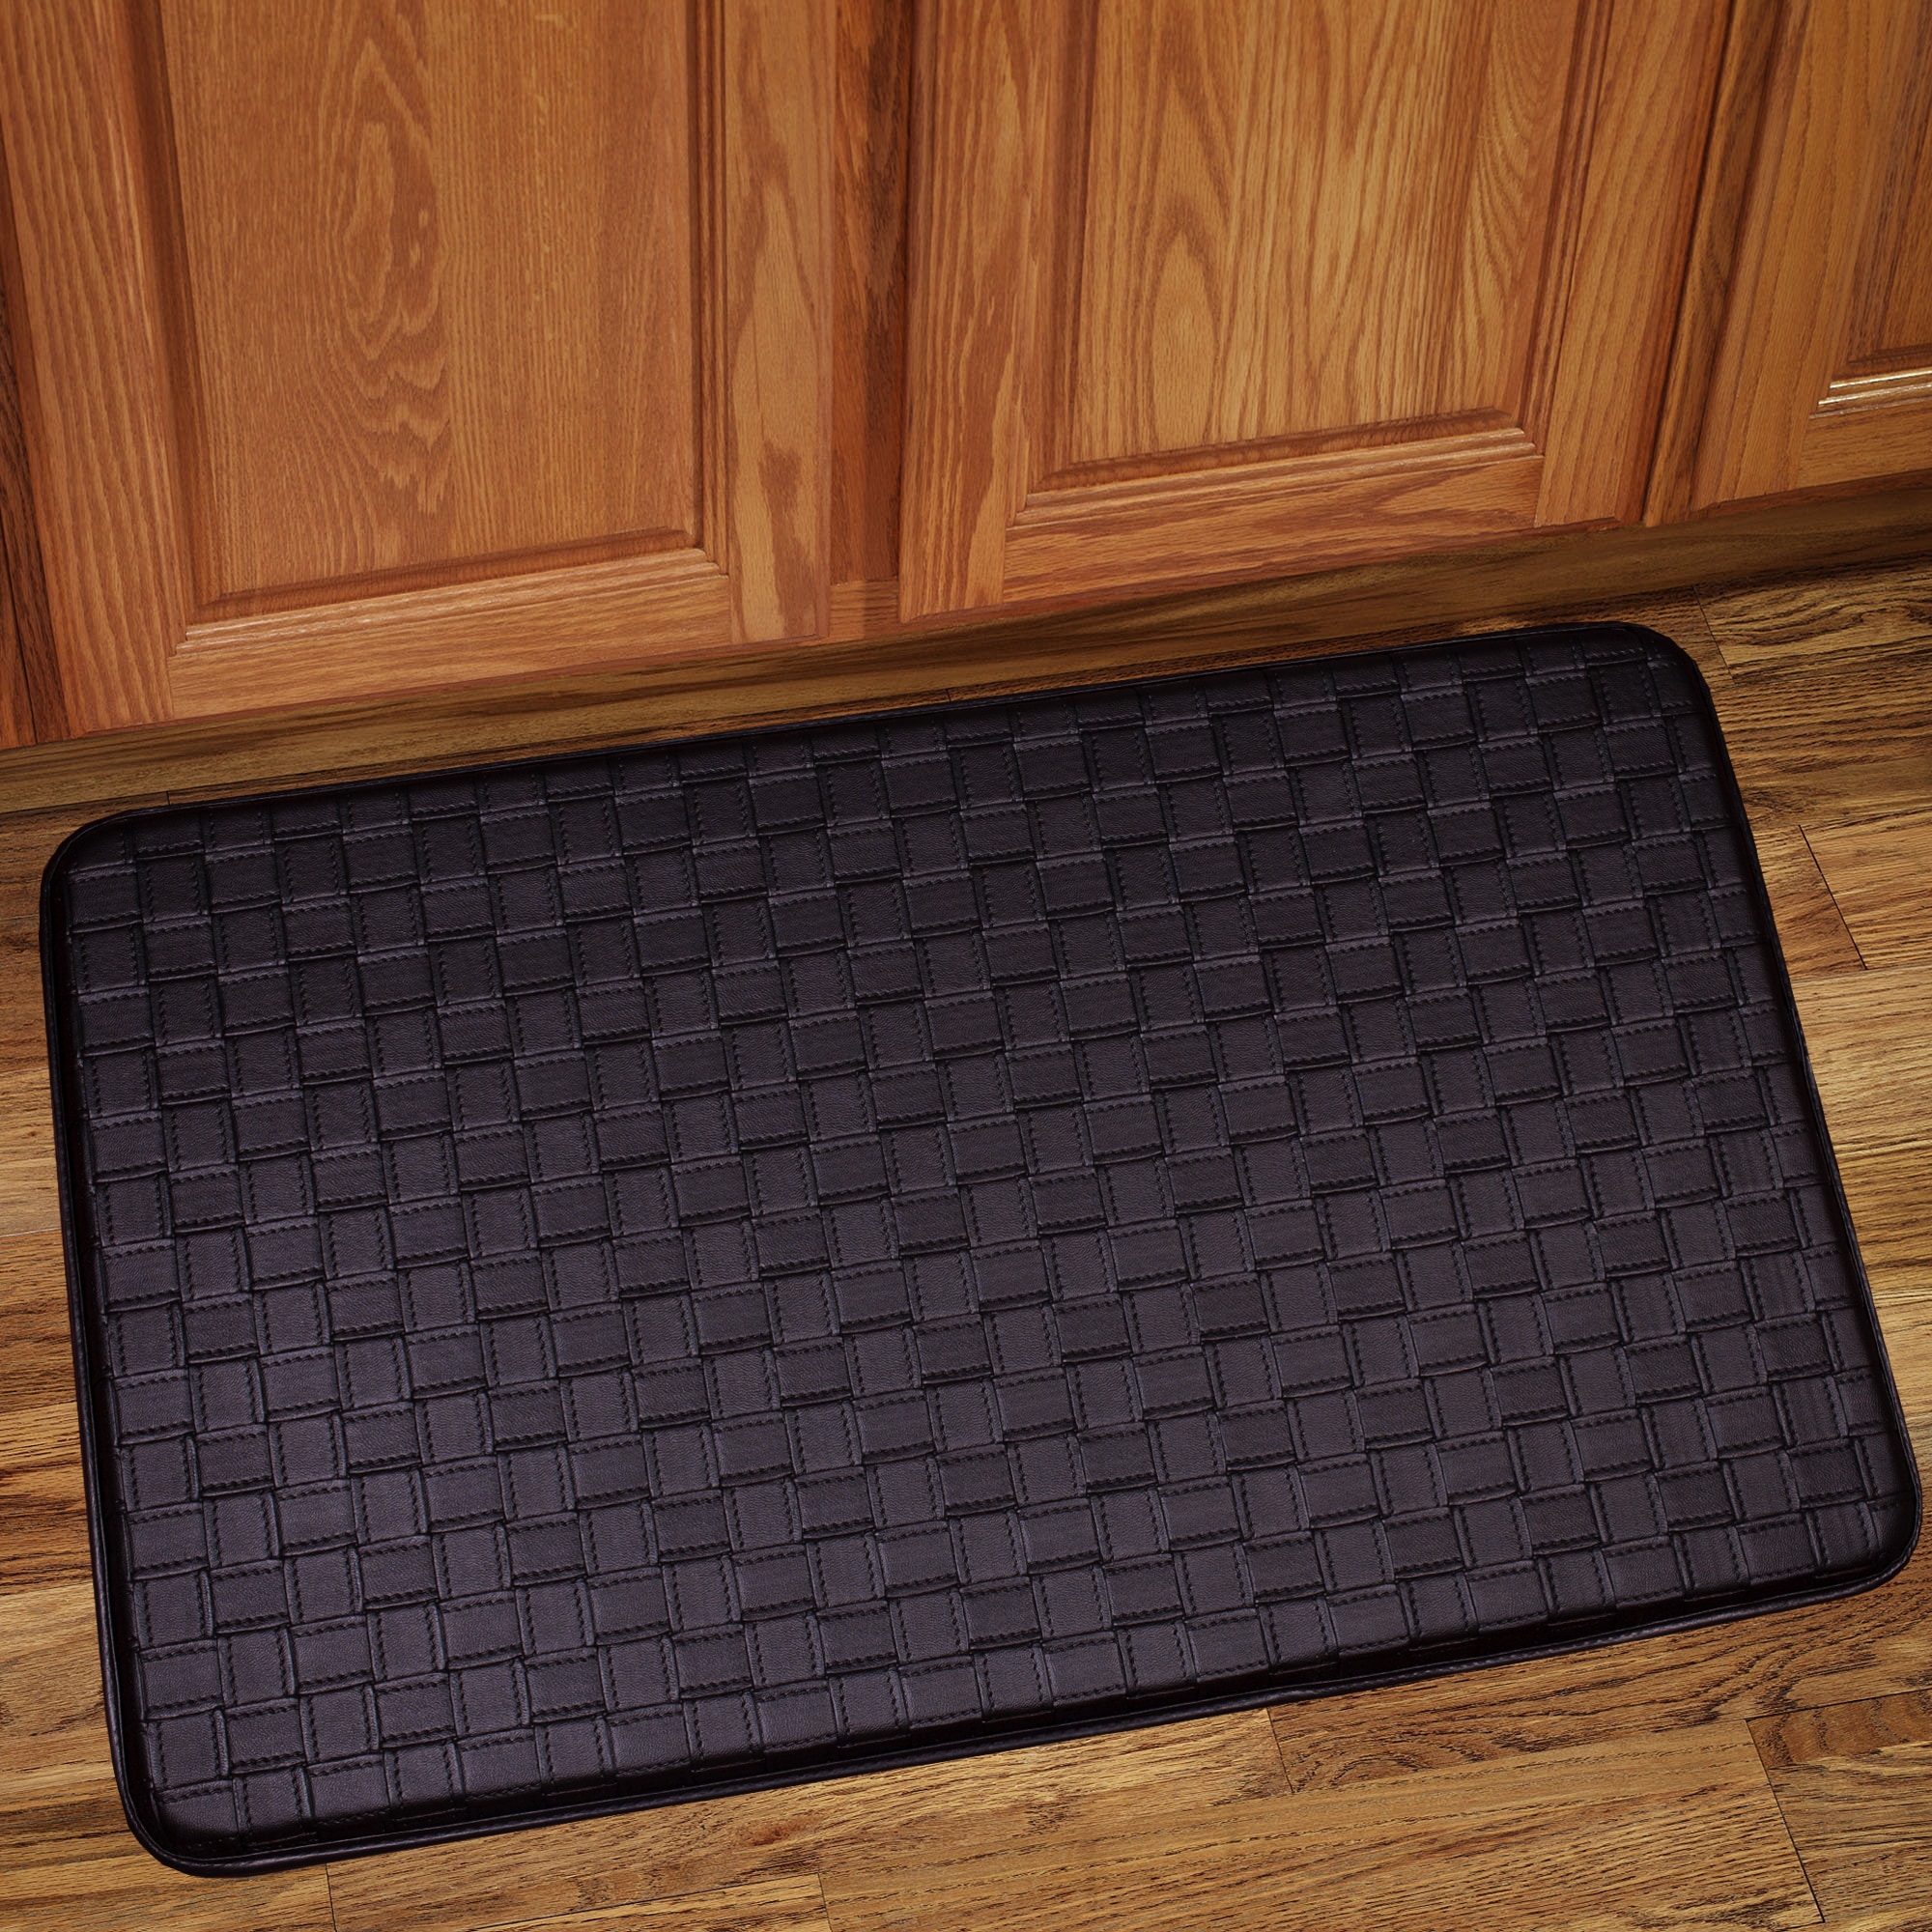 Shop Memory Foam Anti Fatigue Kitchen Floor Mat On Sale